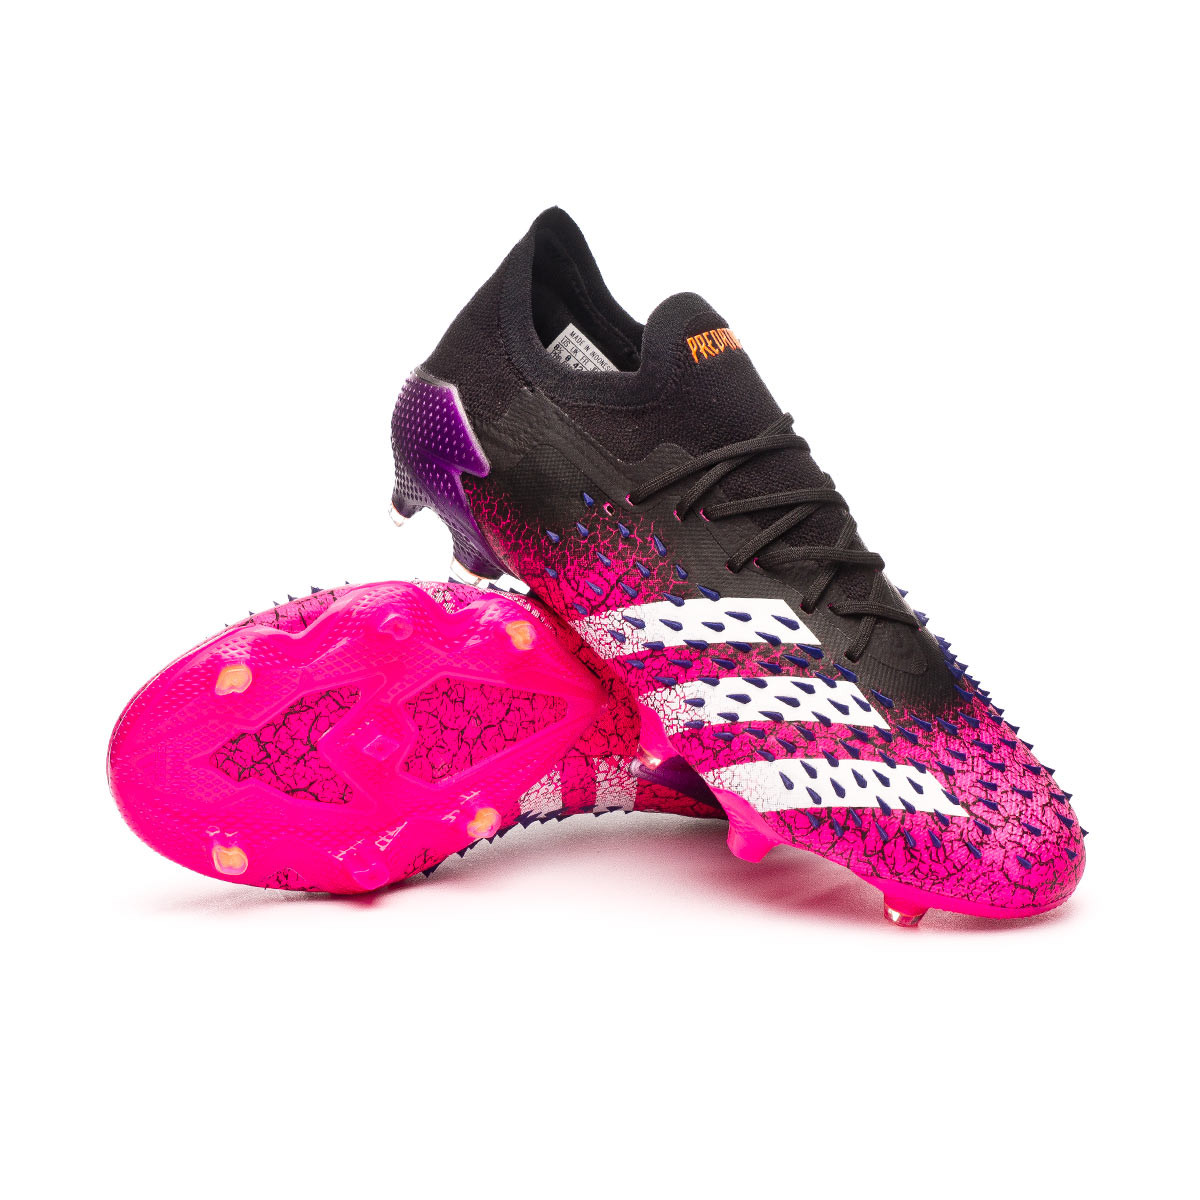 Bota fútbol Predator Freak .1 L FG Black-White-Shock Pink - Fútbol Emotion